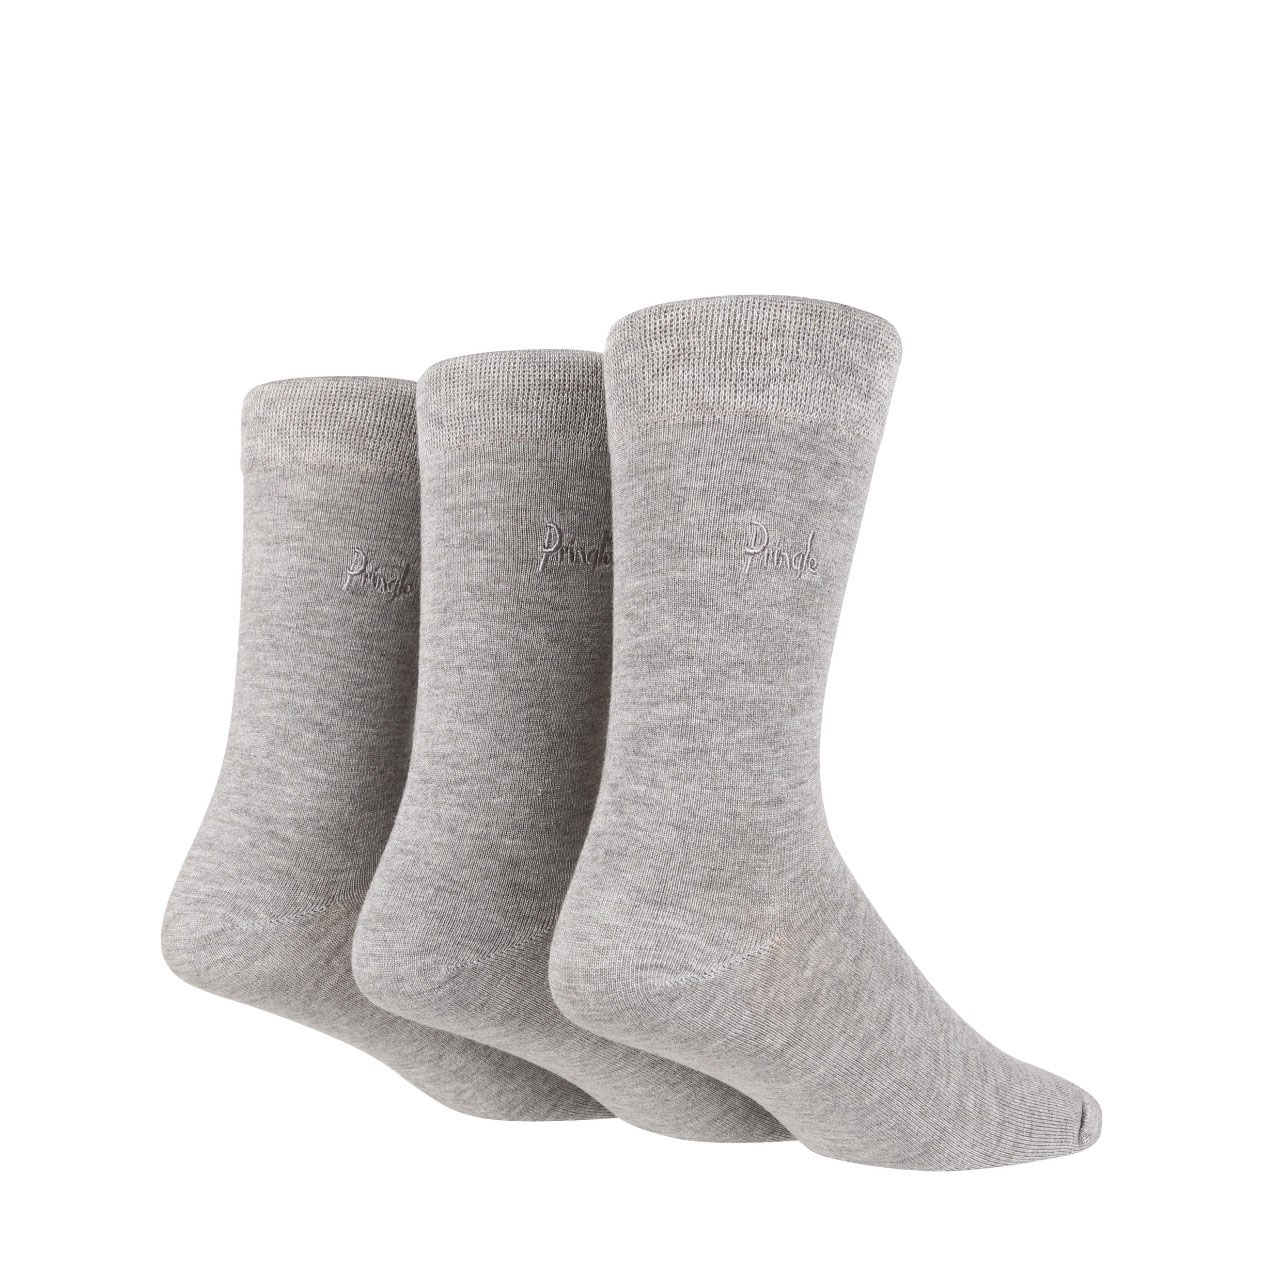 Black, Men's Pringle Gentle-grip Bamboo Socks - Pack of 3